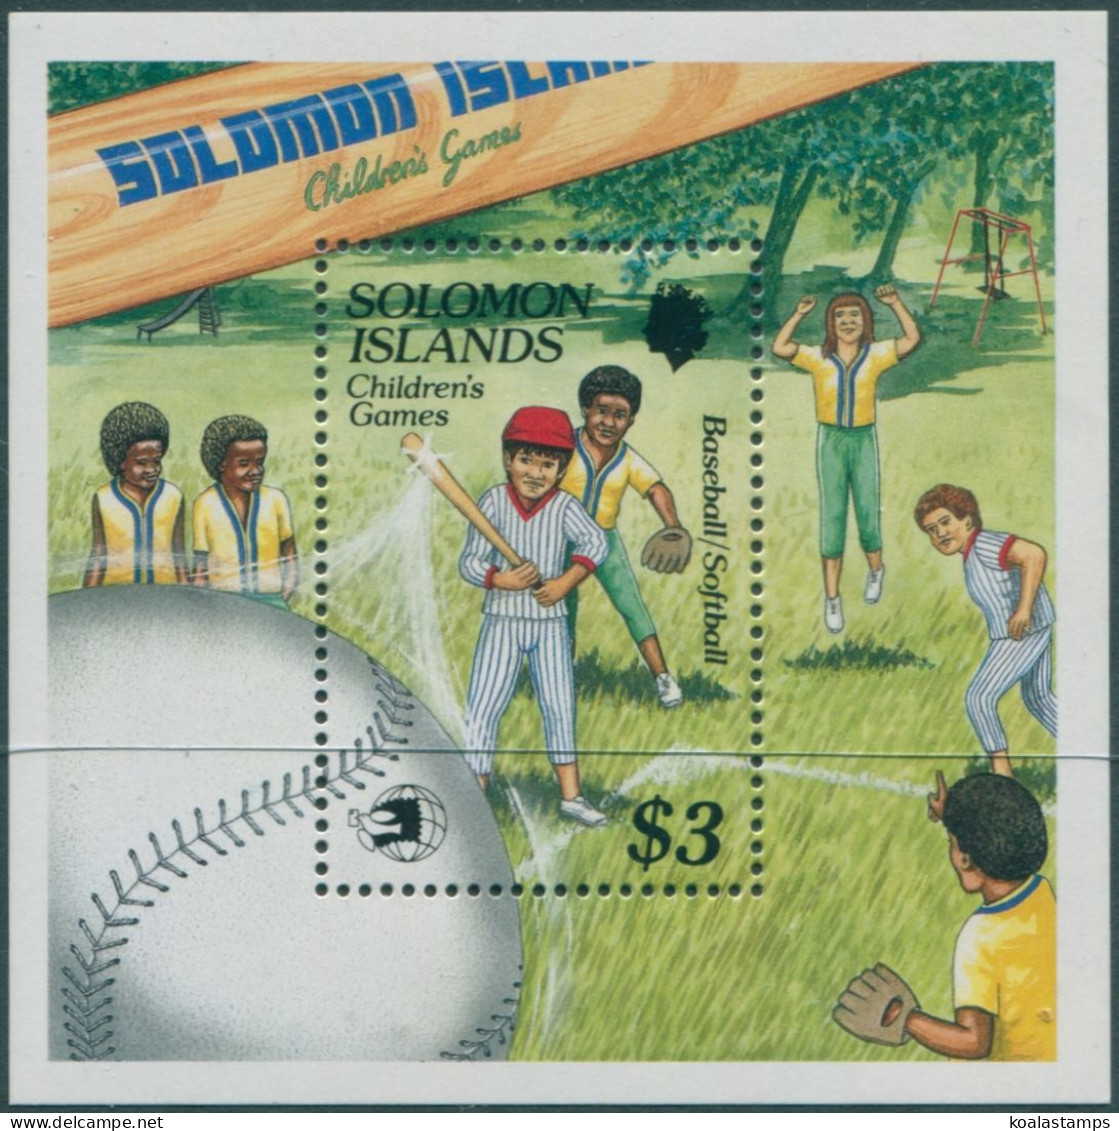 Solomon Islands 1989 SG661 Childrens Games MS MNH - Salomoninseln (Salomonen 1978-...)